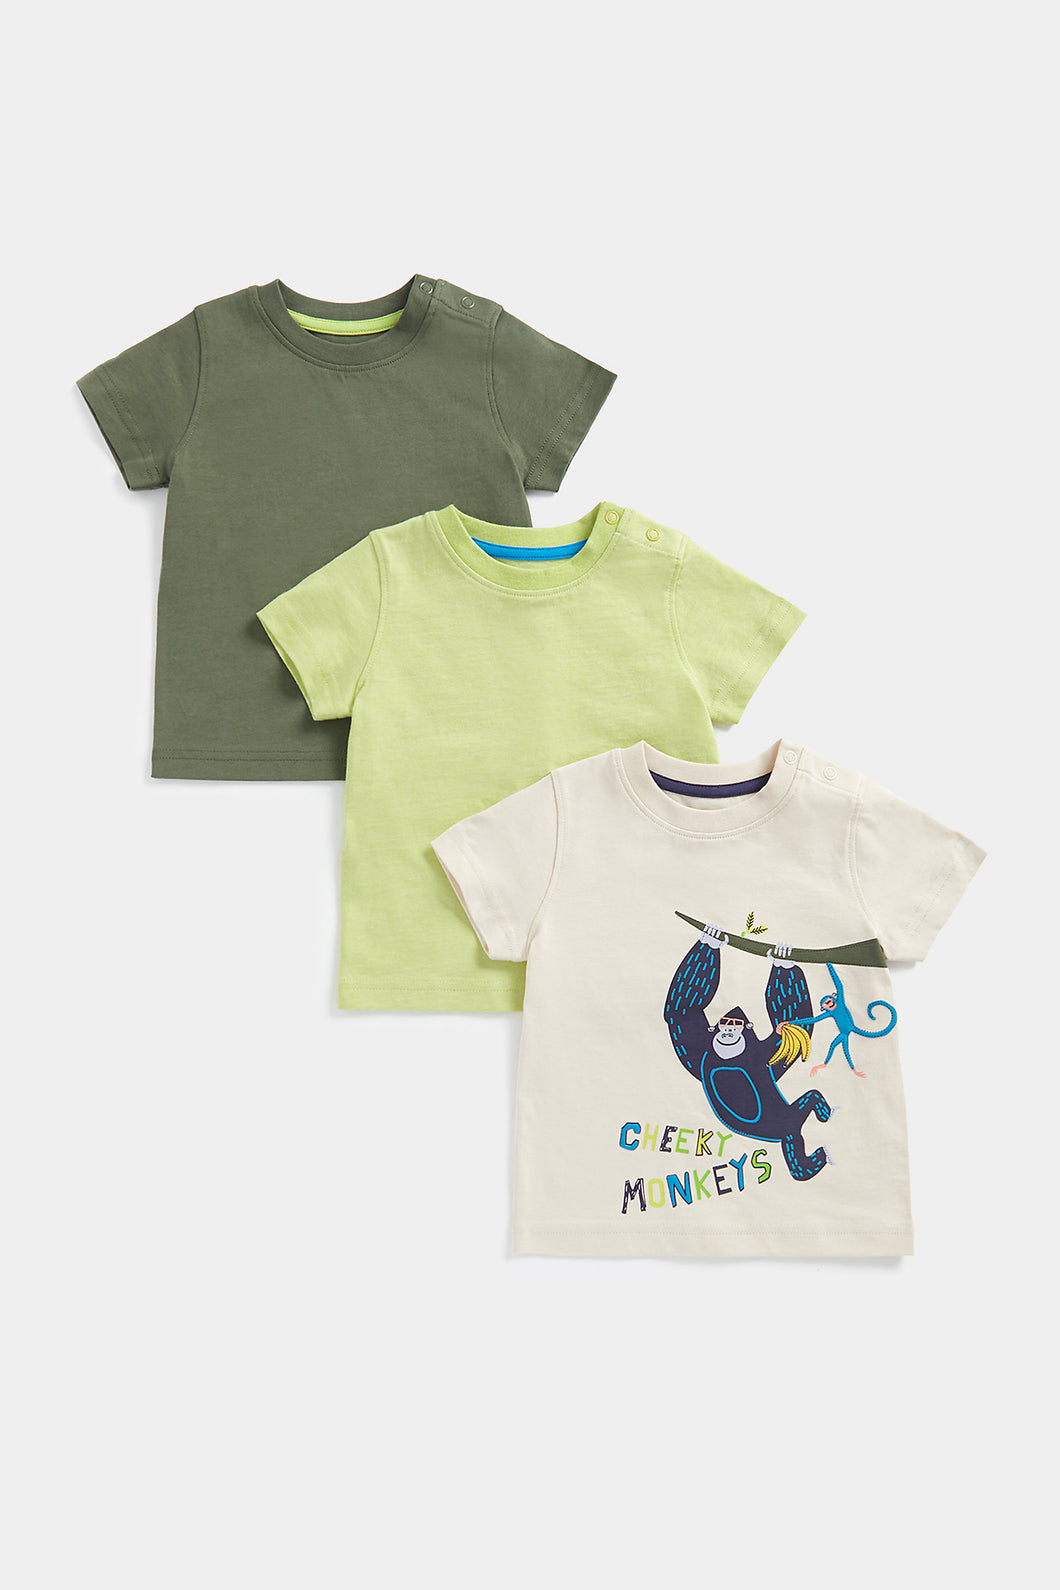 Cheeky Monkey T-Shirts - 3 Pack